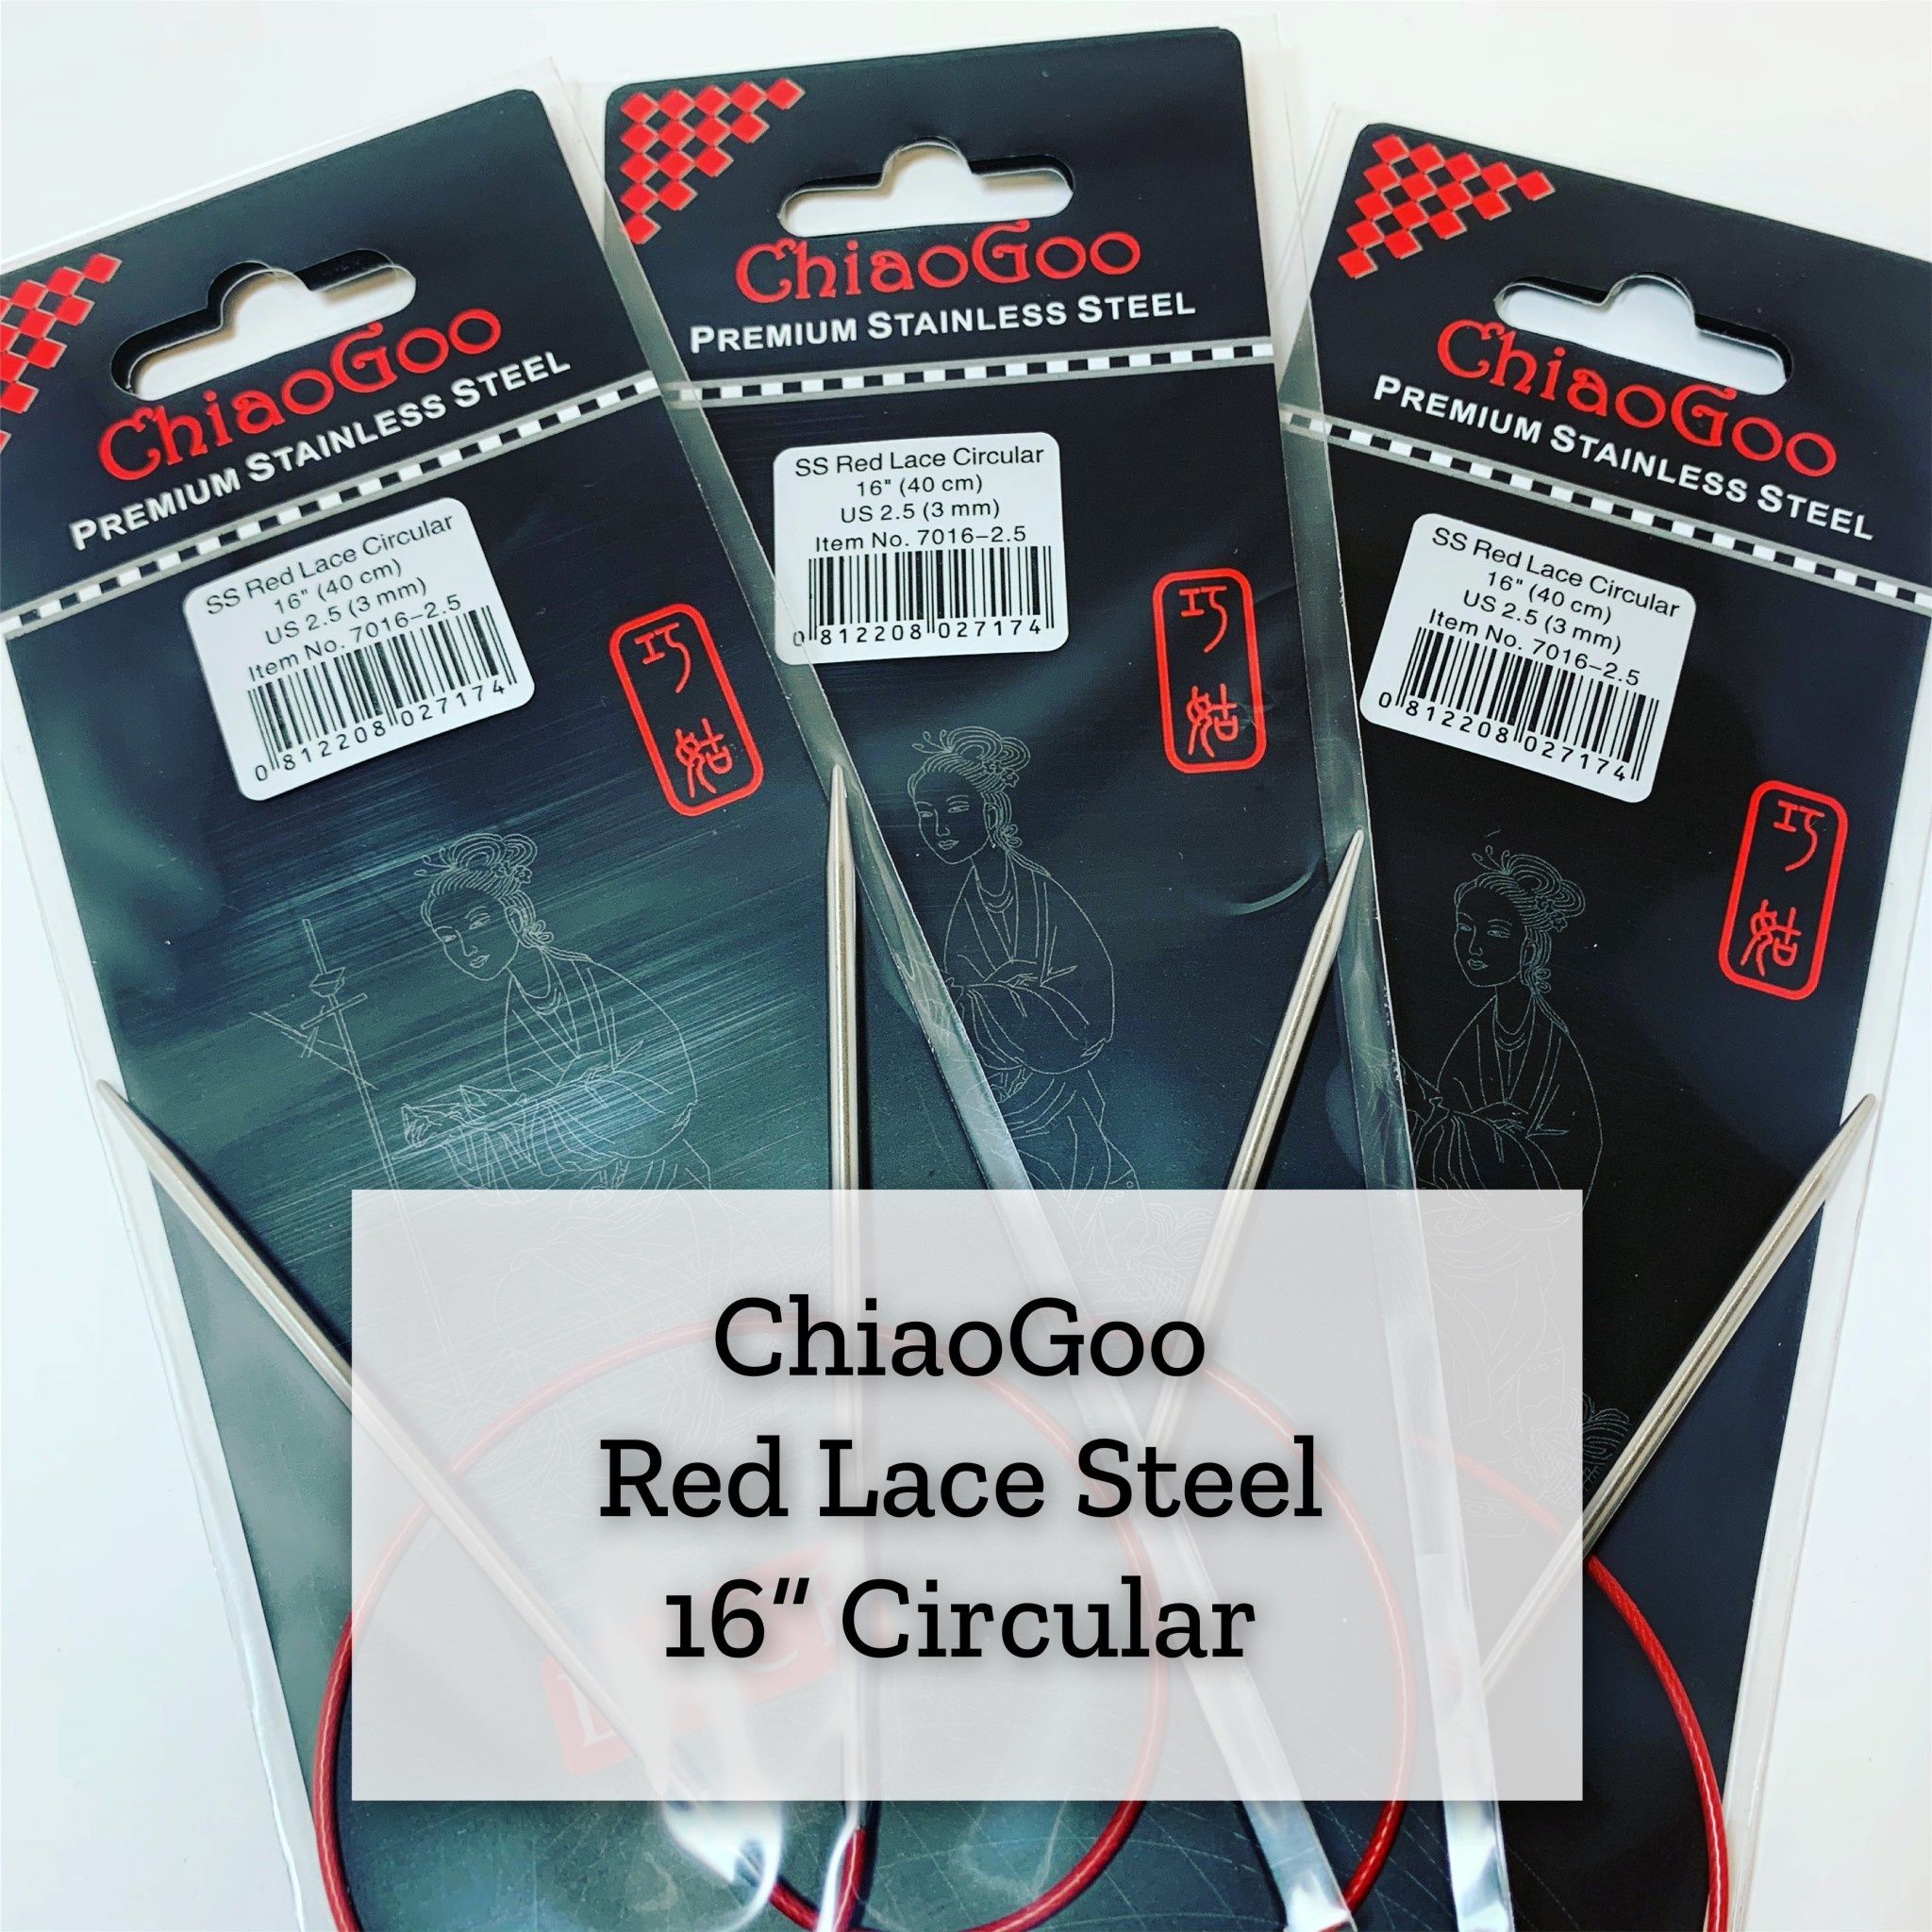 ChiaoGoo Red Lace Steel - 16" 6.5 mm